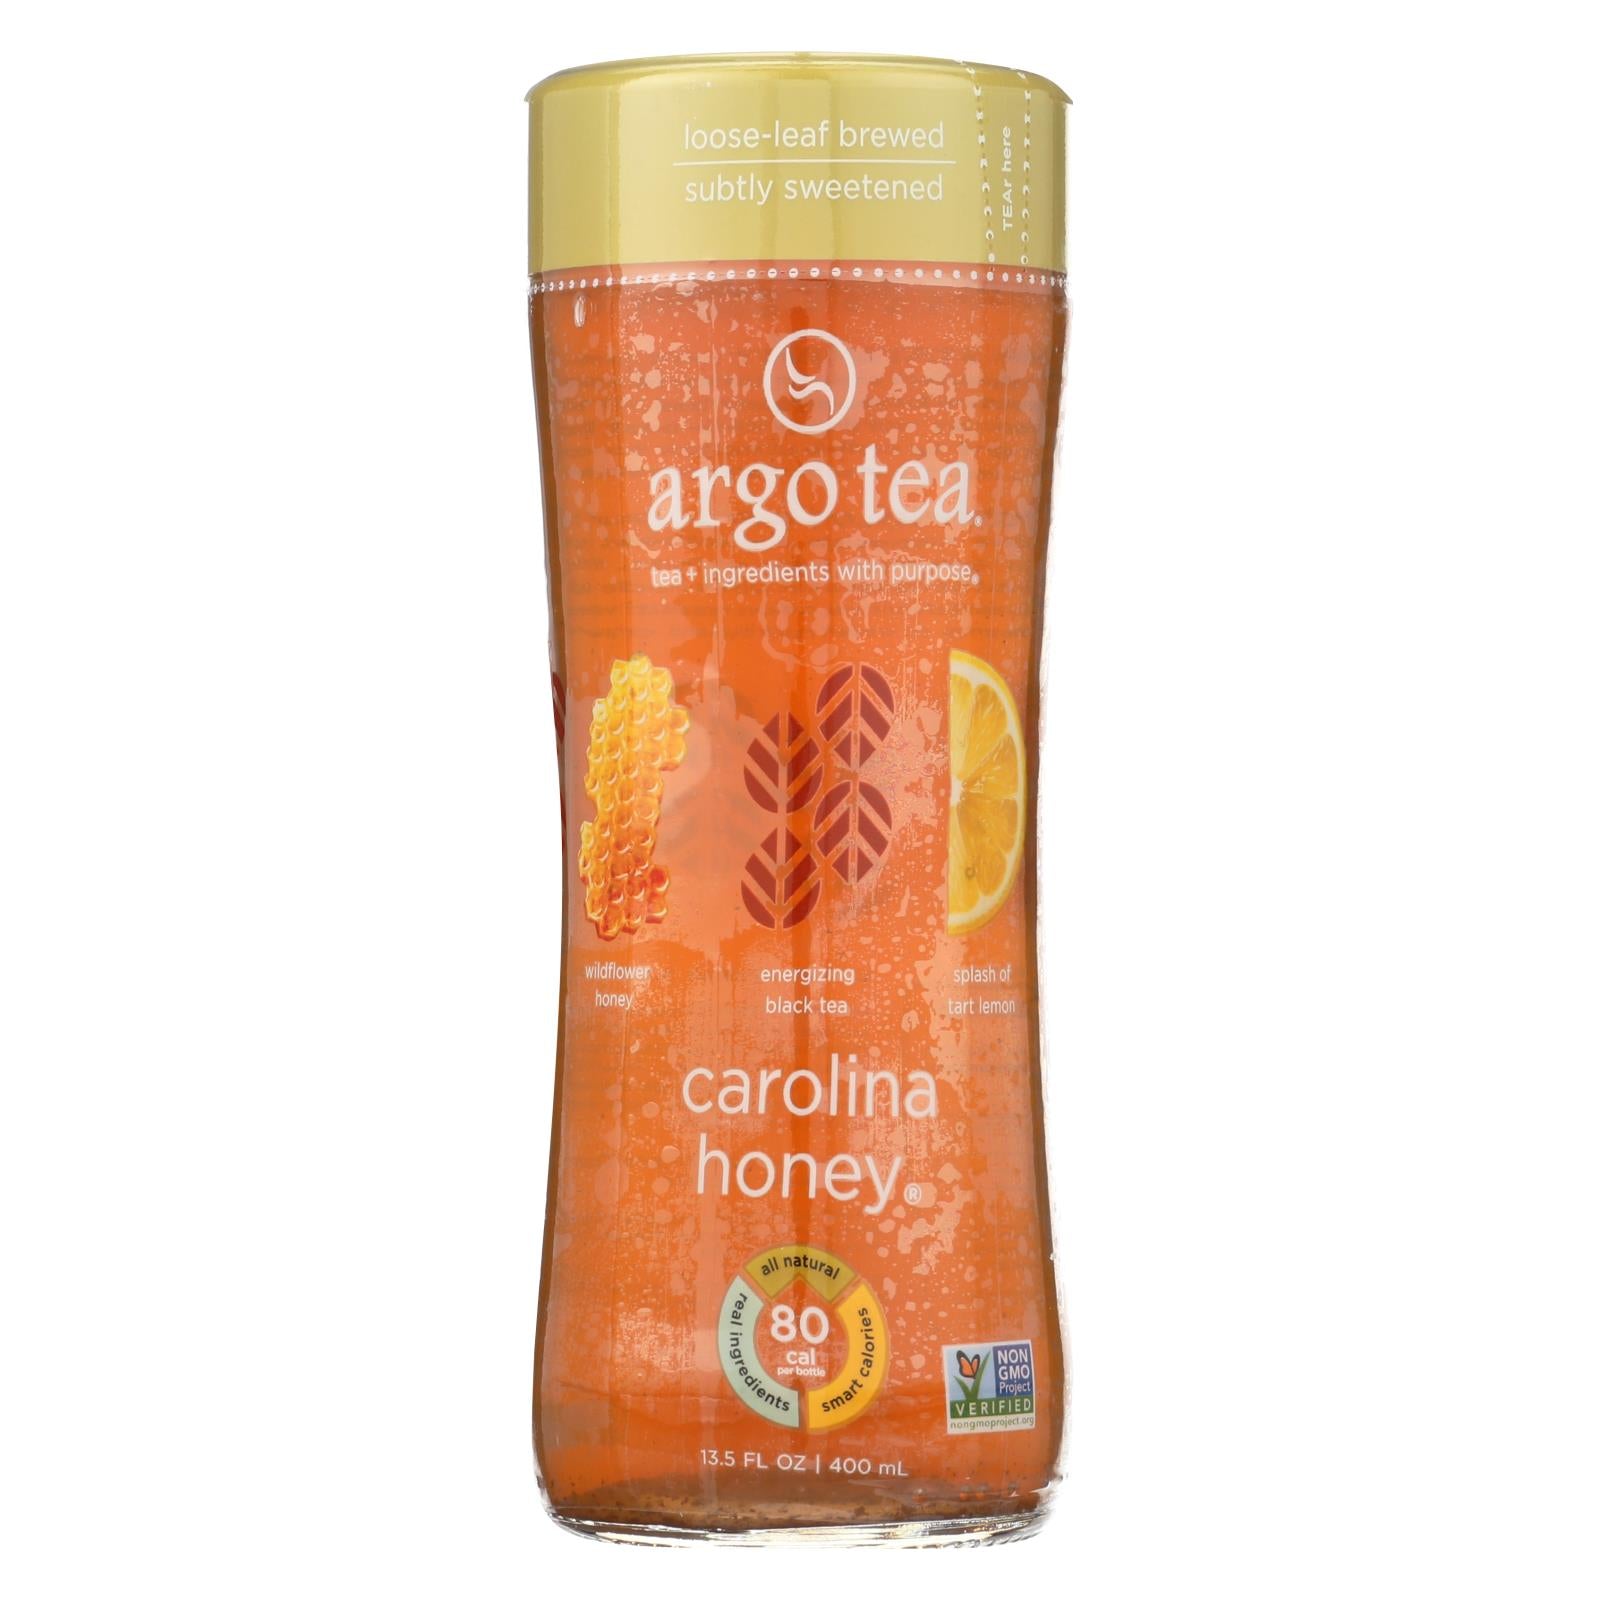 Argo Tea, Argo Tea Iced Green Tea - Carolina Honey - Case of 12 - 13.5 Fl oz. (Pack of 12)